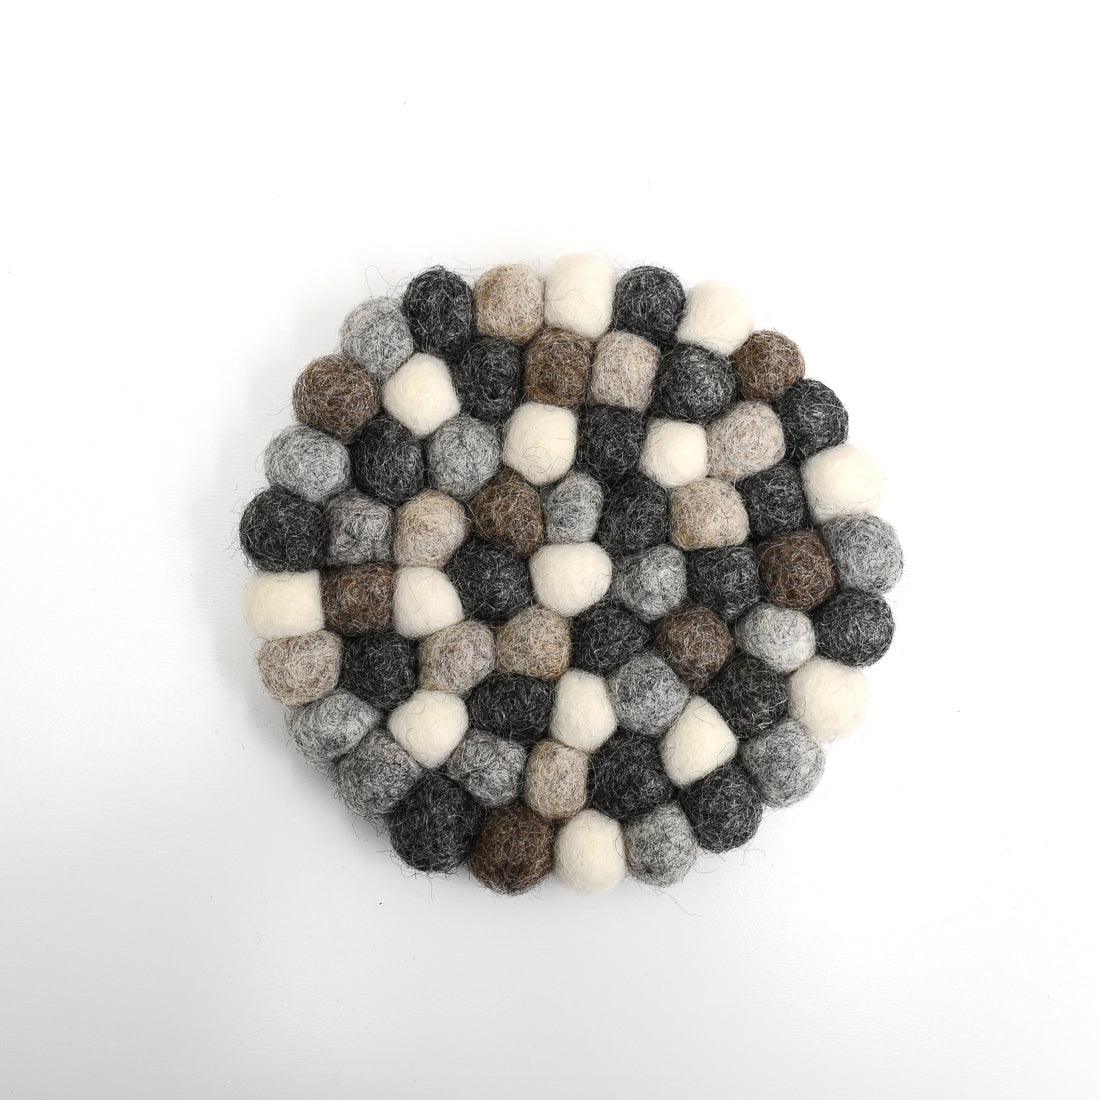 Felt Ball Cup Coasters - Grey Stones Bundle of 6 - Tara Treasures